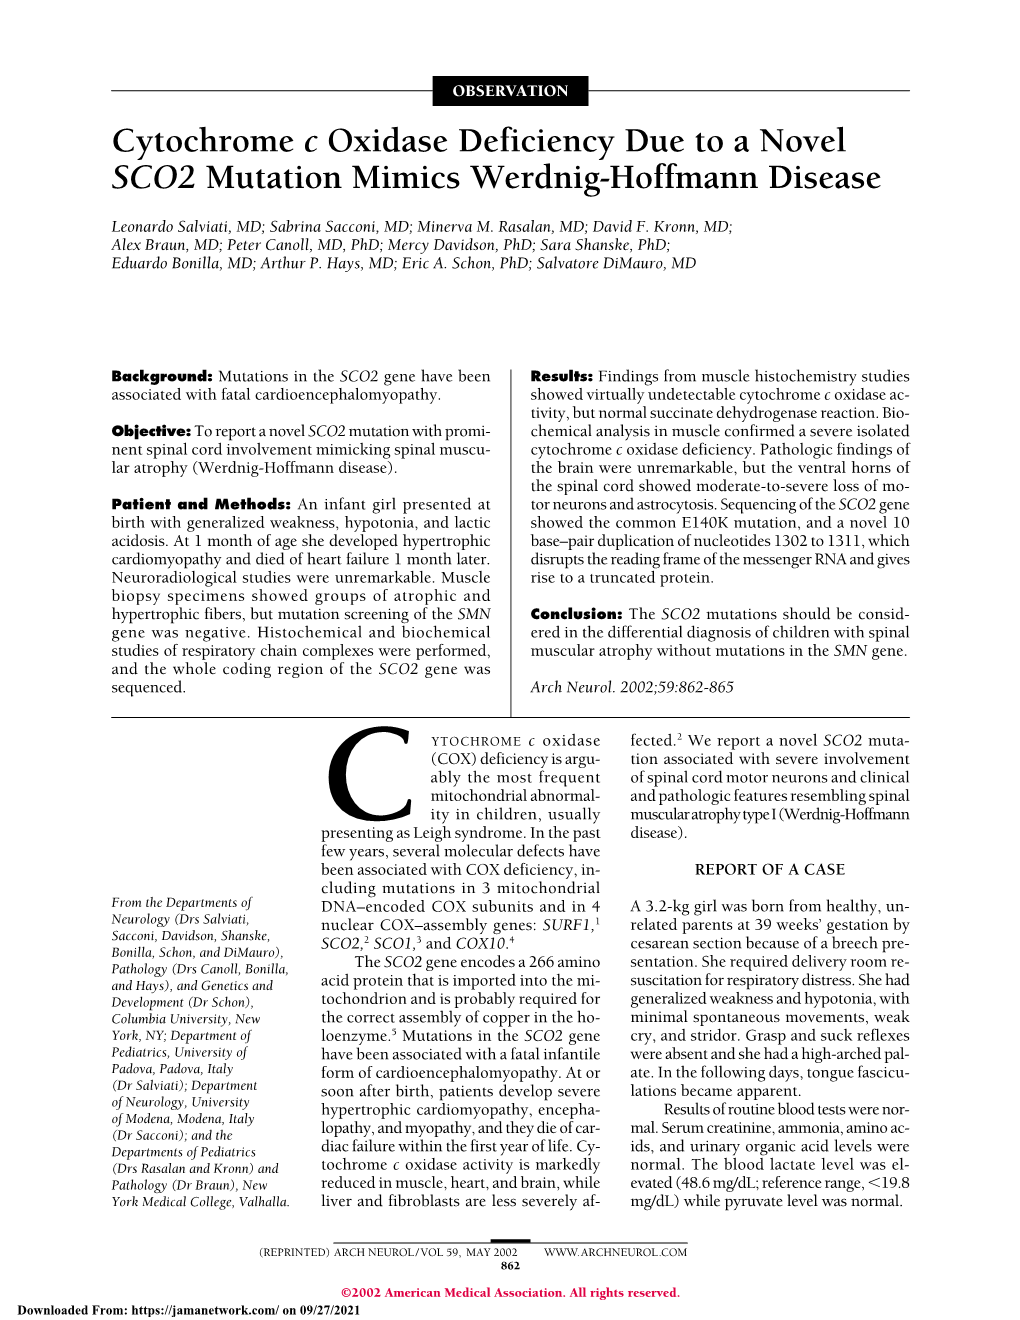 Cytochrome C Oxidase Deficiency Due to a Novel SCO2 Mutation Mimics Werdnig-Hoffmann Disease